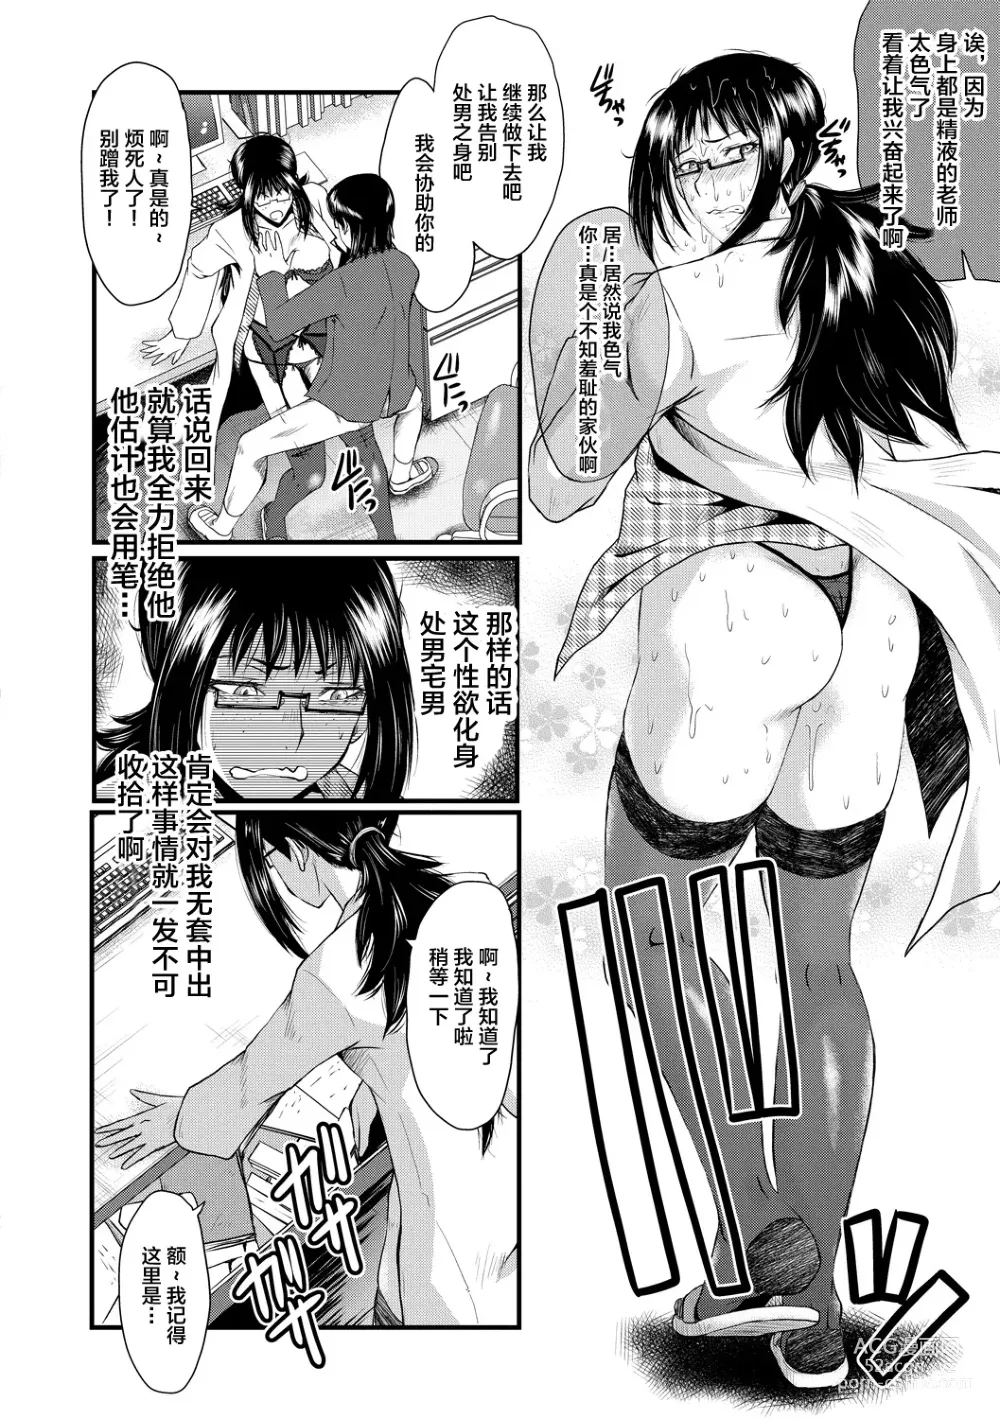 Page 32 of manga Sennou Kikan